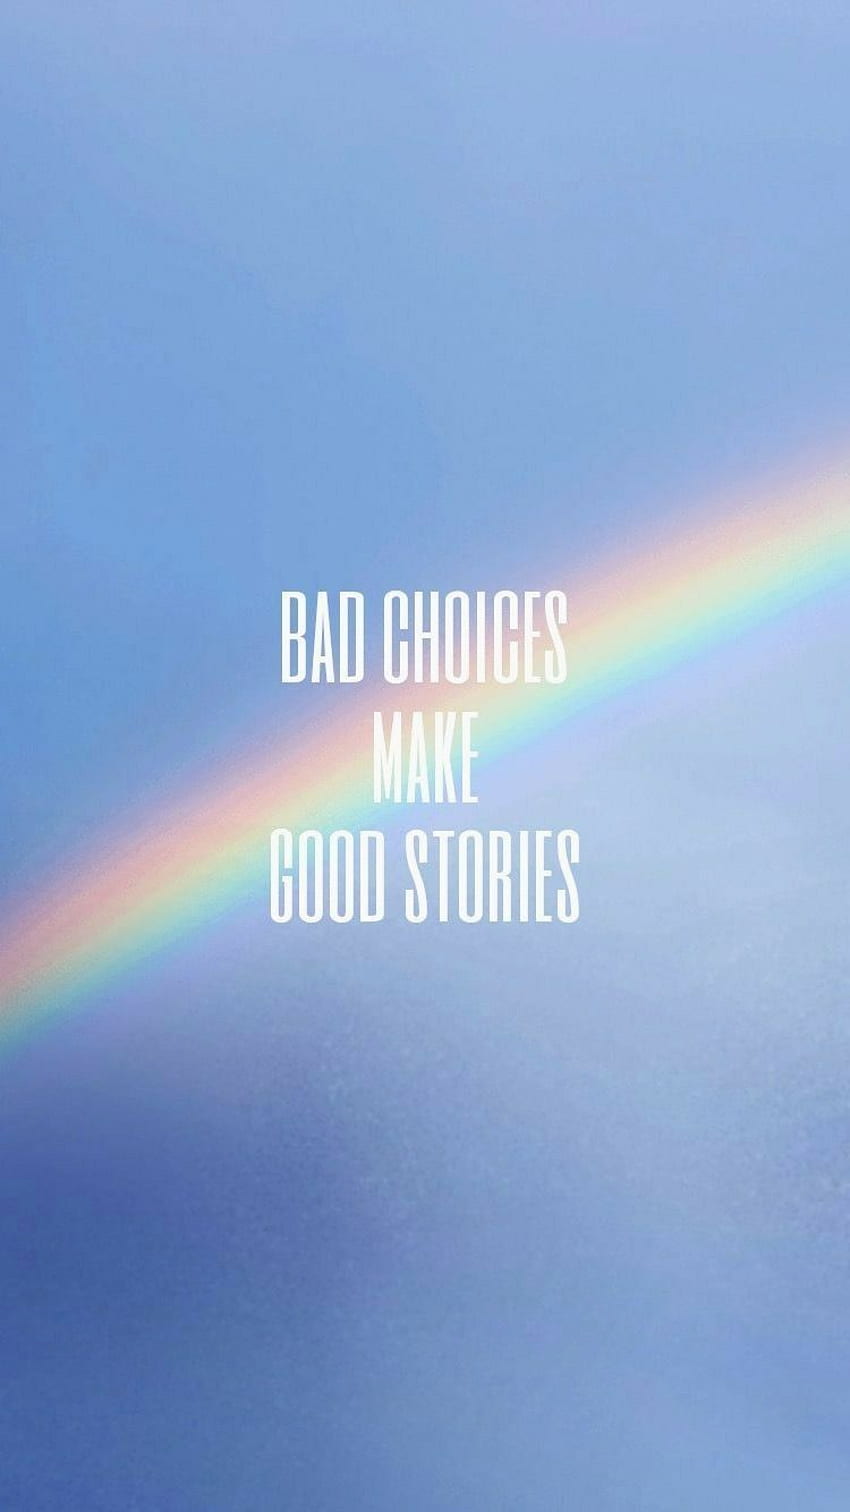 A rainbow over the words bad choices make good stories - Rainbows